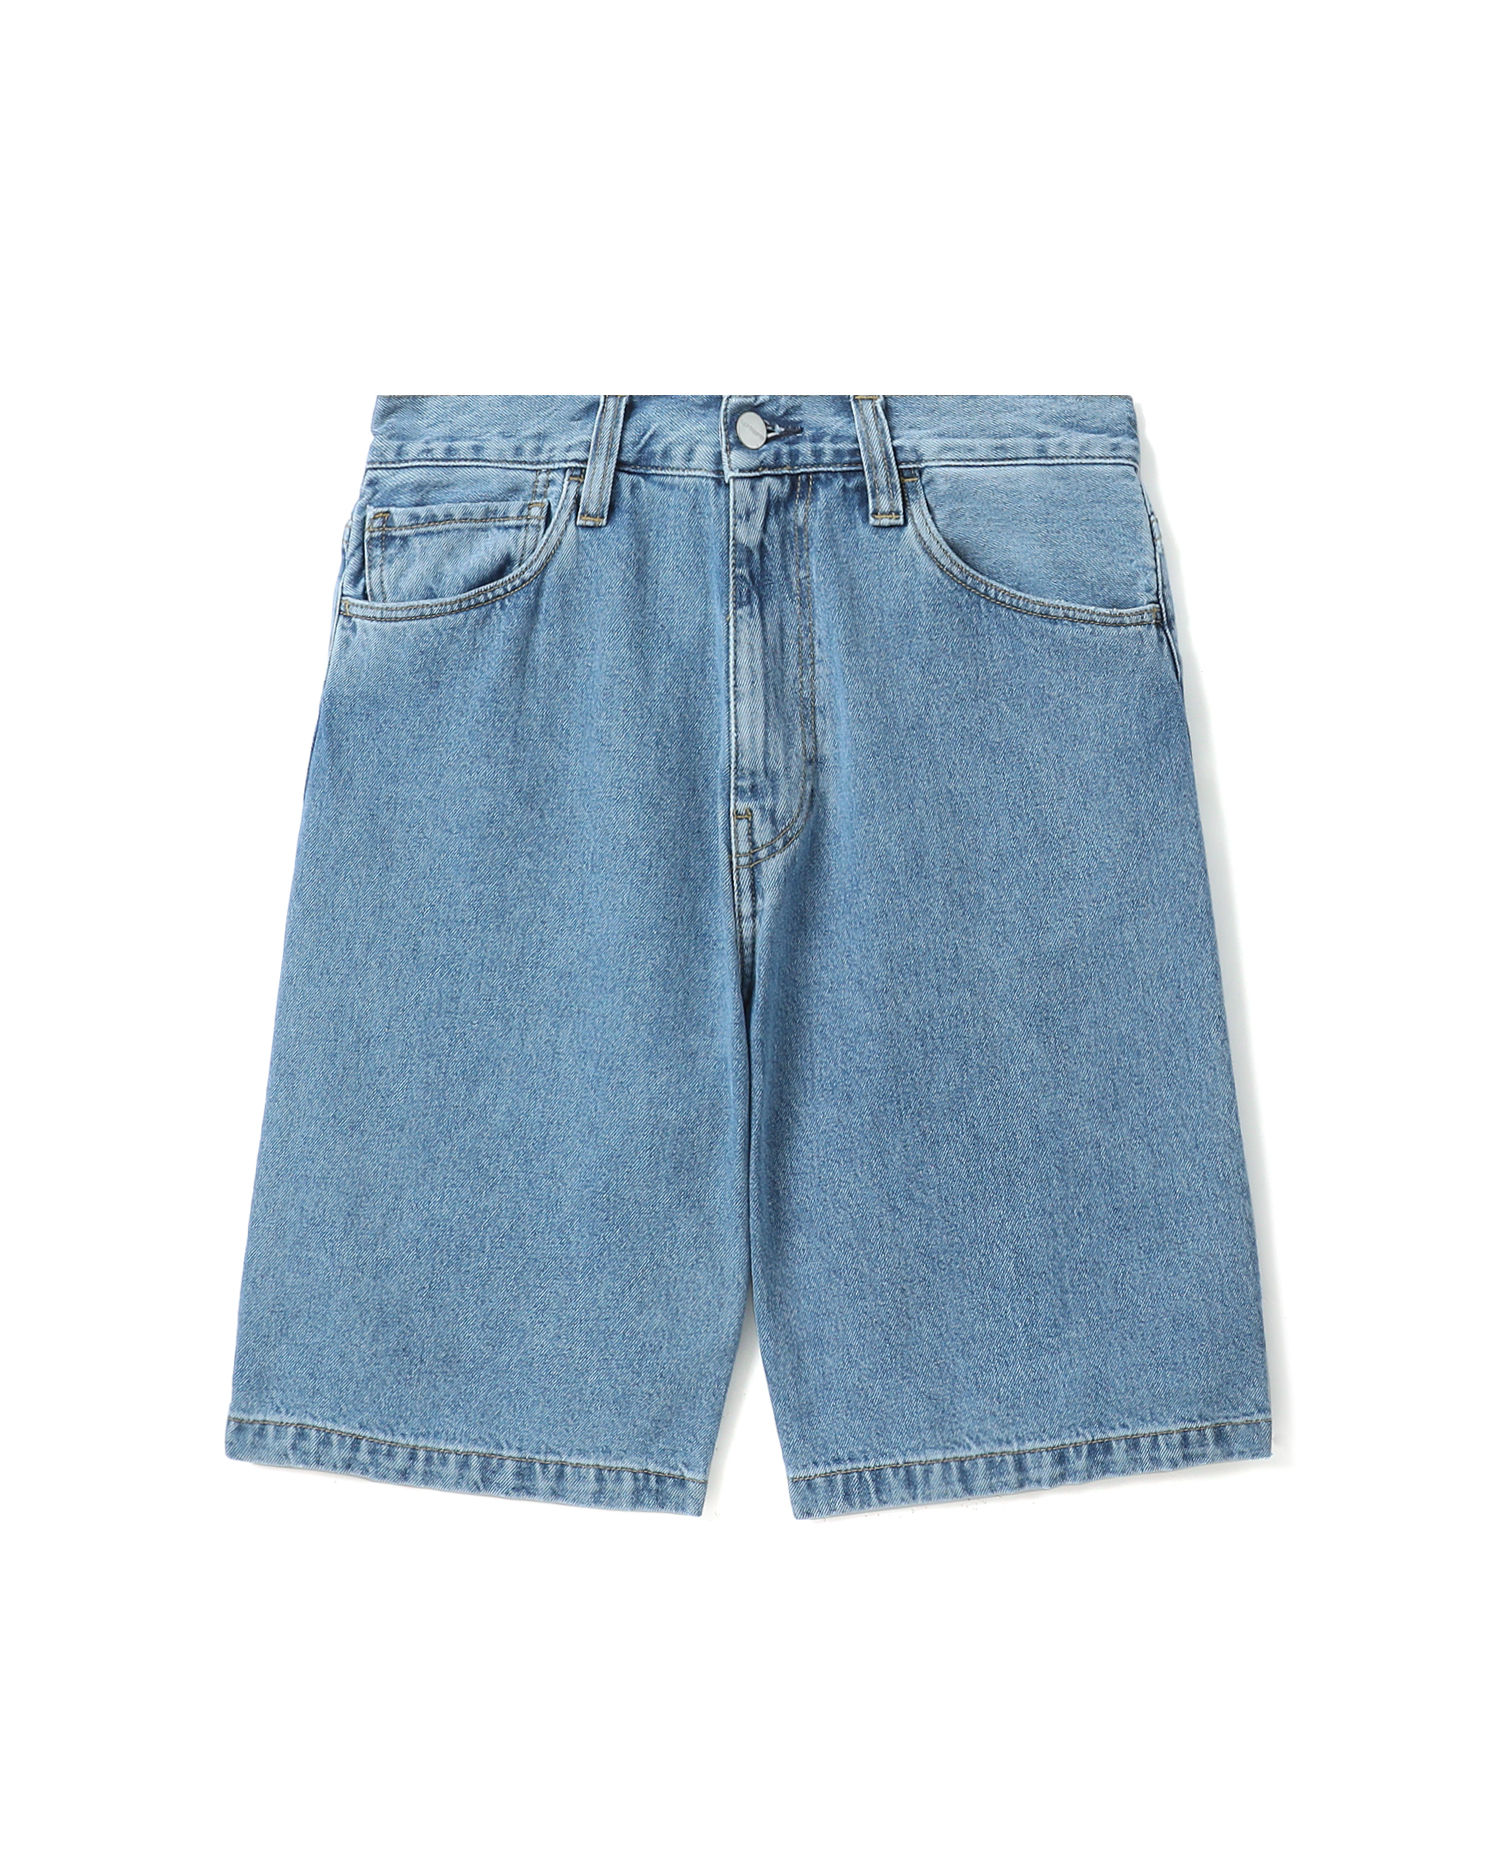 CARHARTT WIP Landon shorts | ITeSHOP